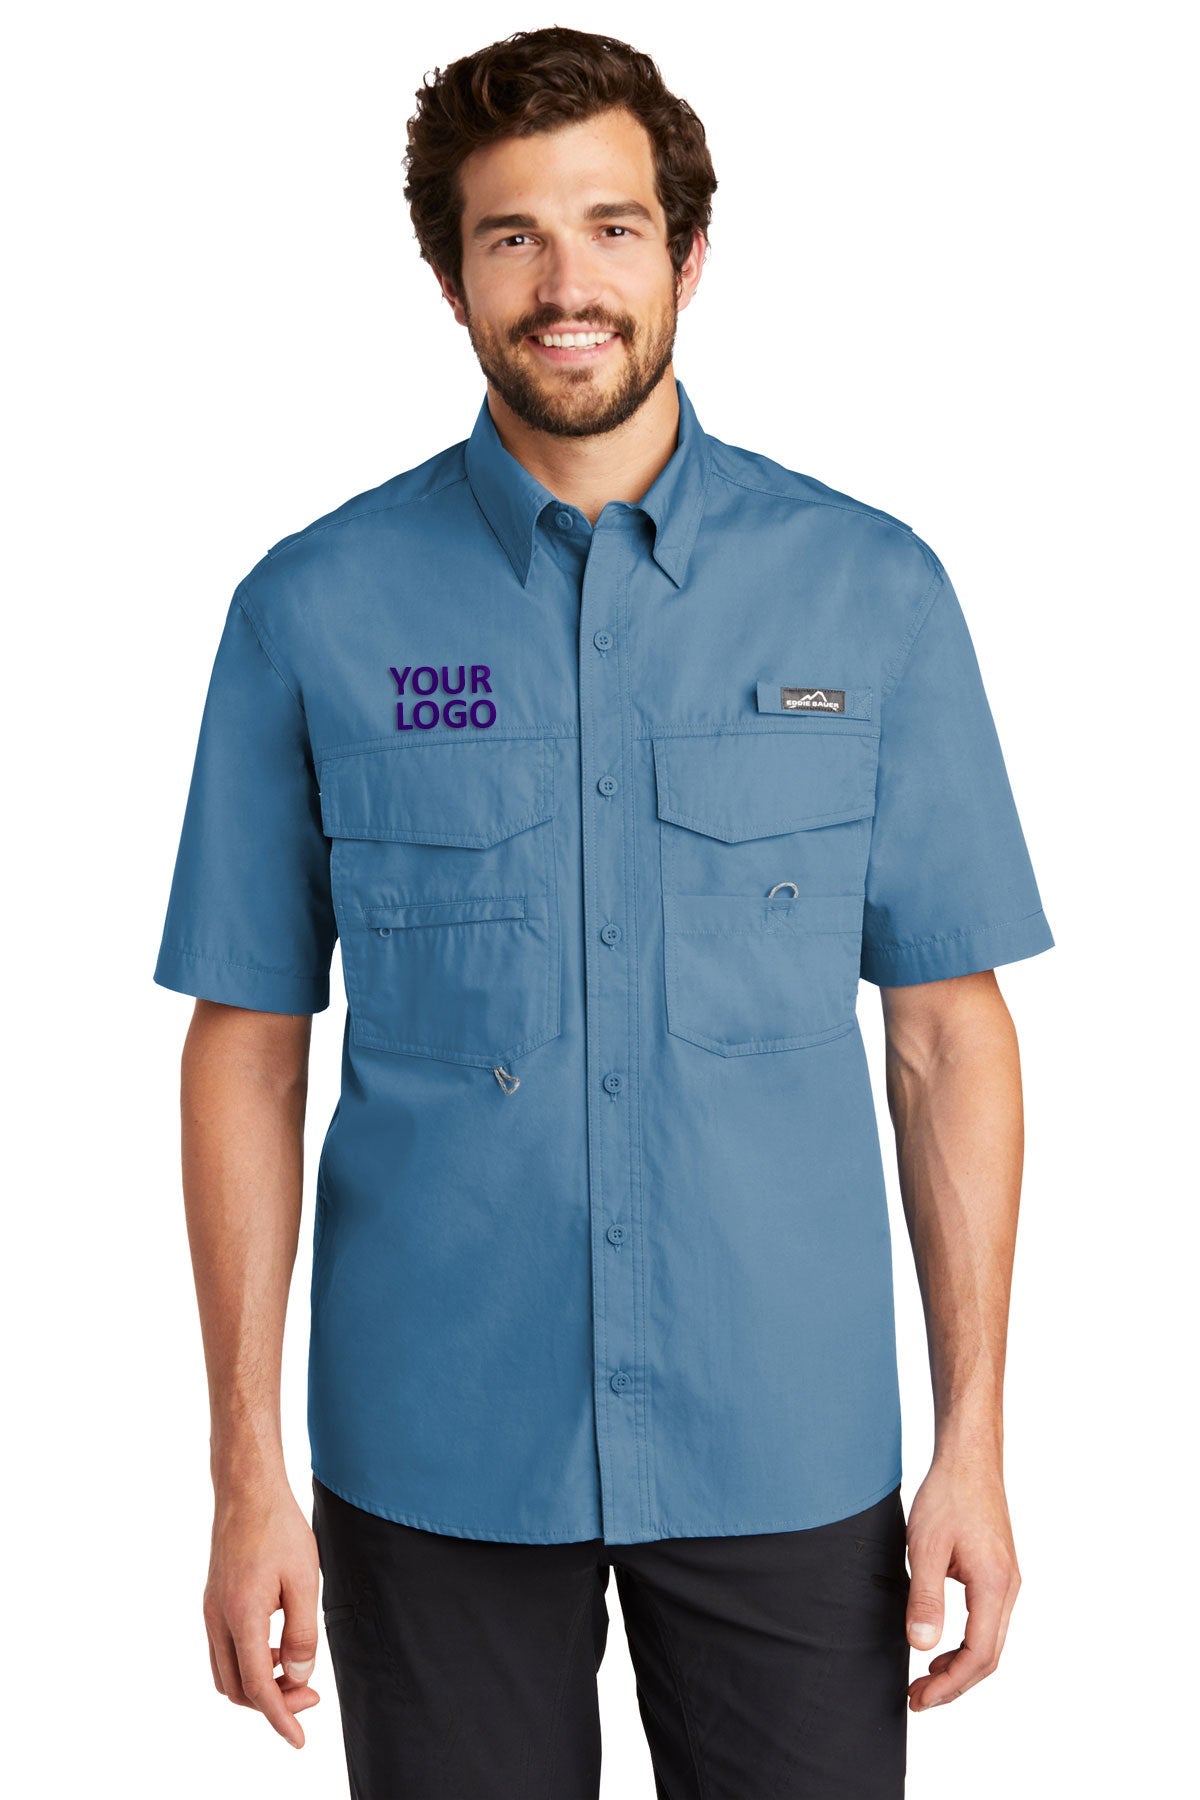 Eddie Bauer Short Sleeve Branded Fishing Shirts, Blue Gill